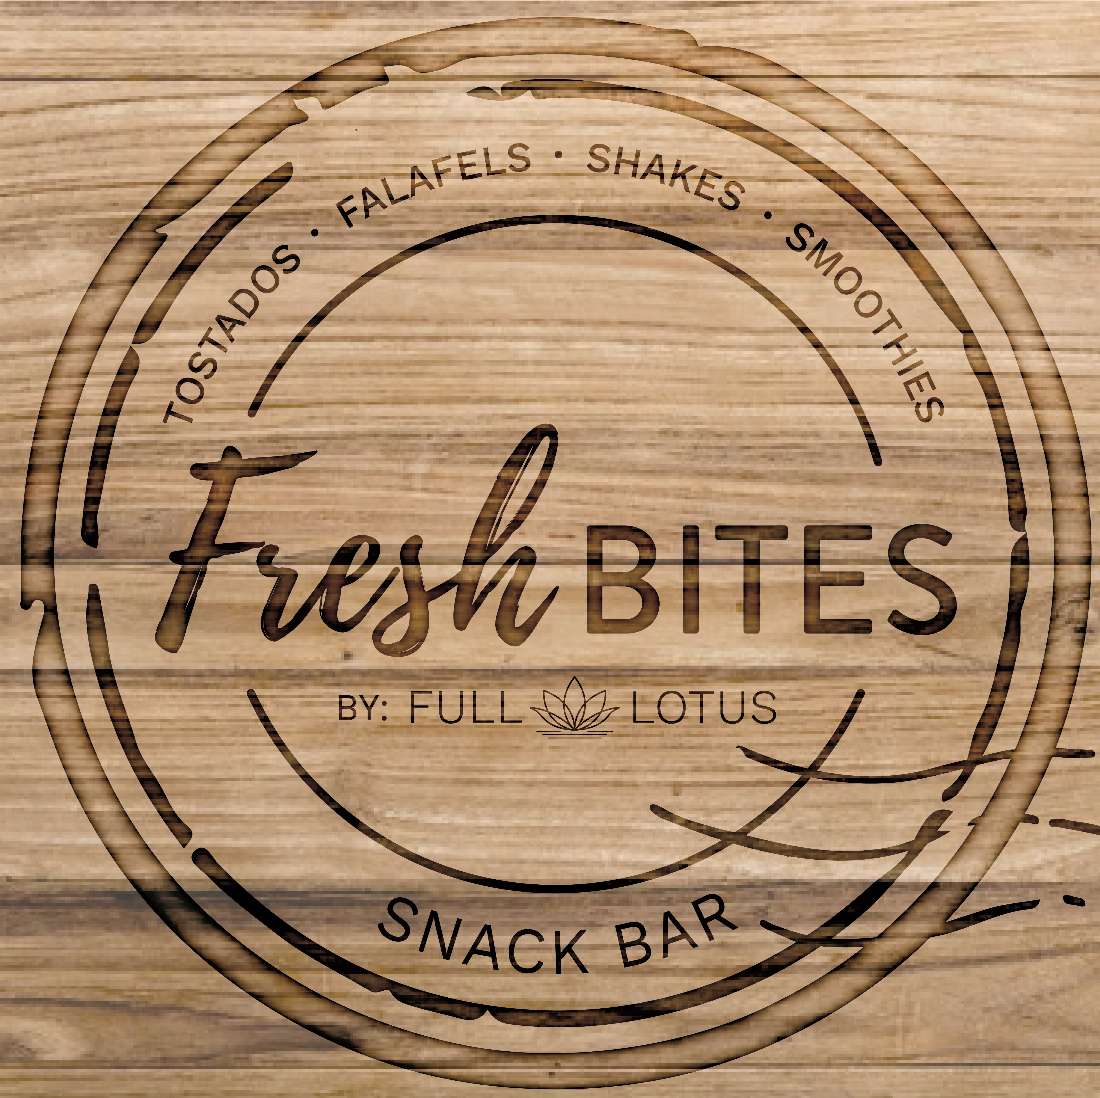 fresh bites-01 - Copy_1572255764.jpg